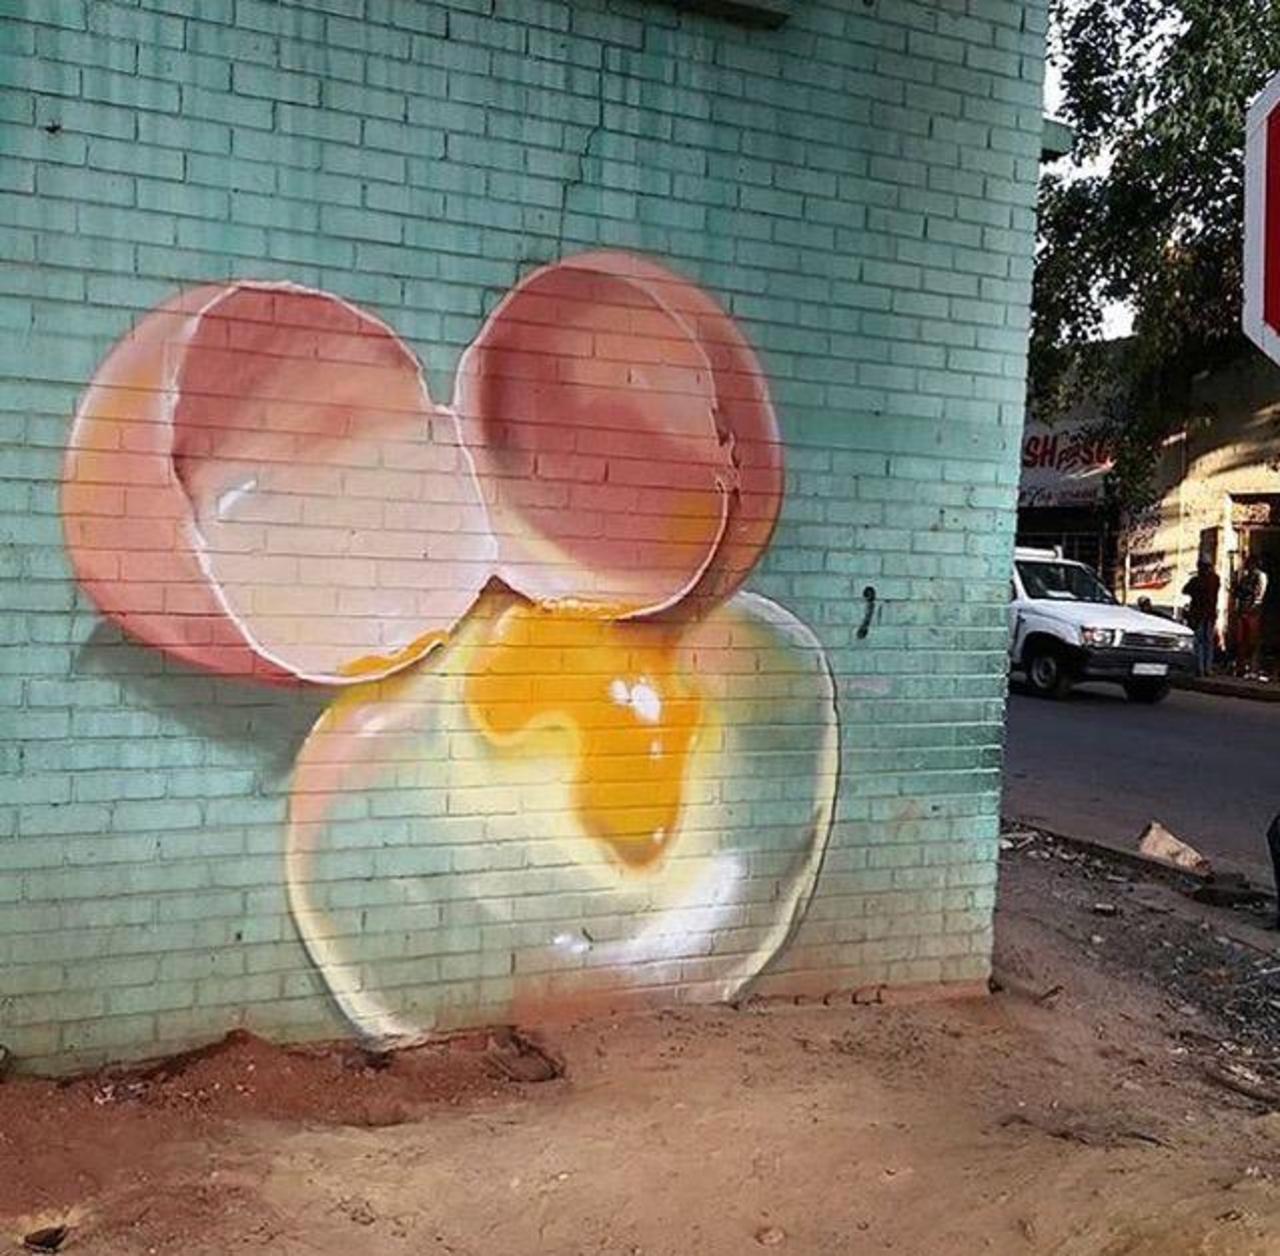 Street Art by falco1 in Johannesburg SA  

#art #graffiti #mural #streetart http://t.co/pkpp4cZlZD